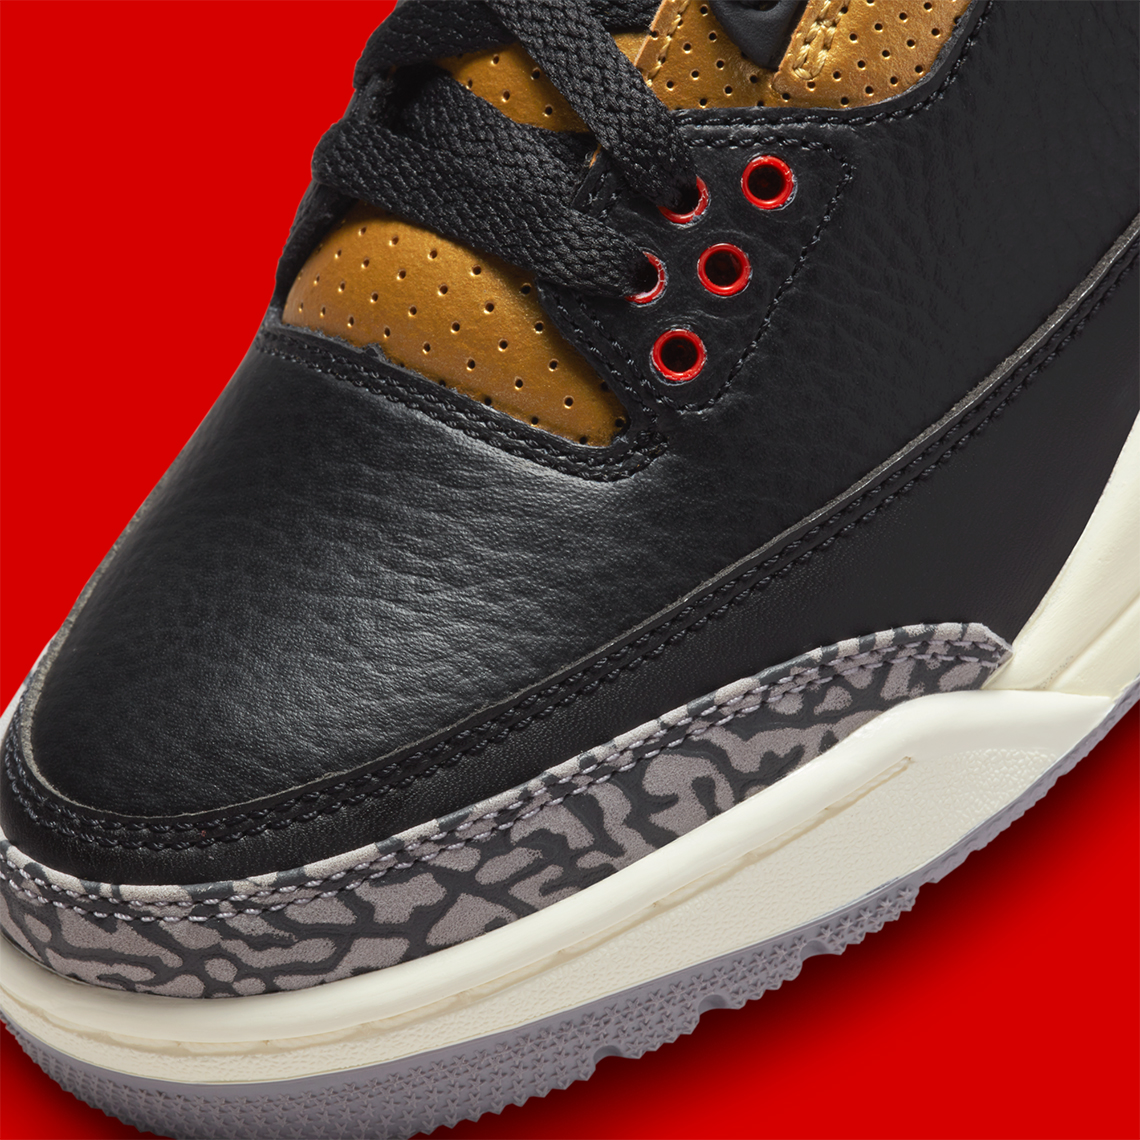 Air Jordan 3 Womens Black Cement Gold Ck9246 067 7